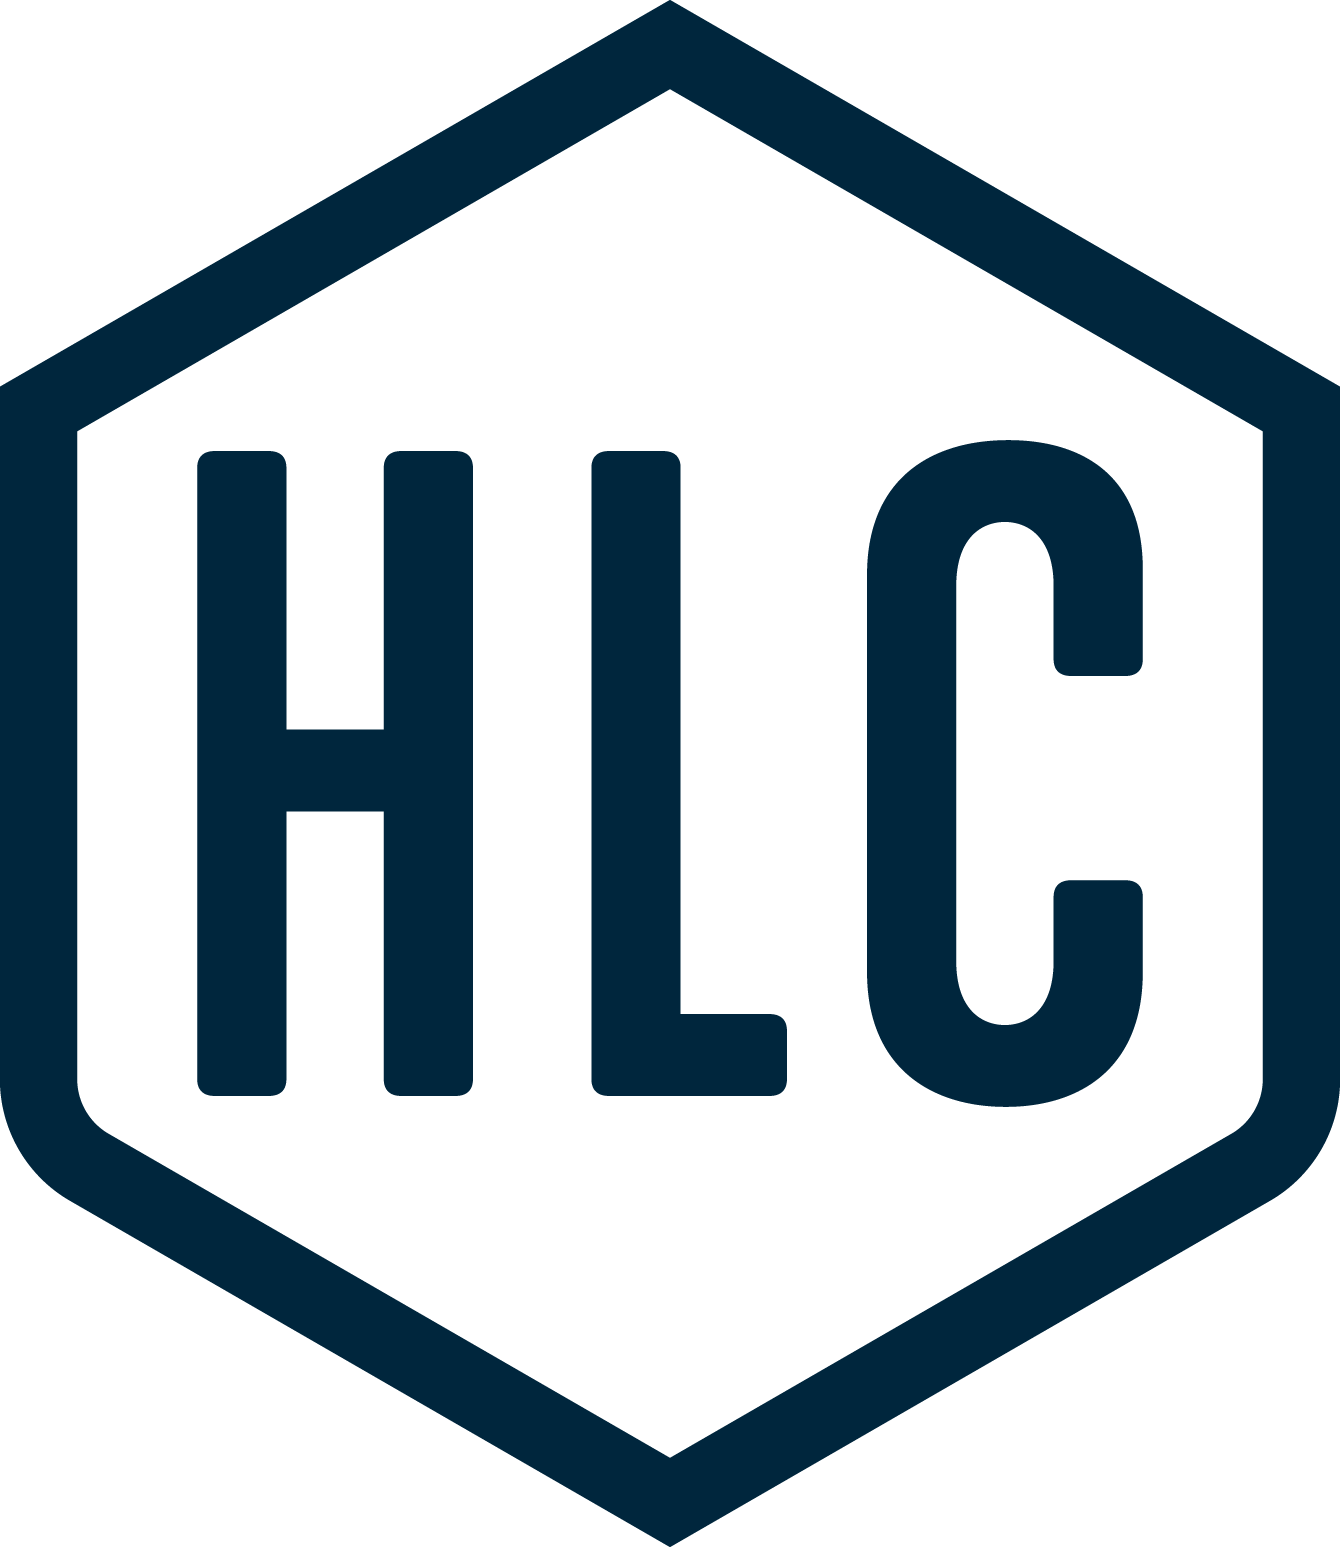 Logo HLC